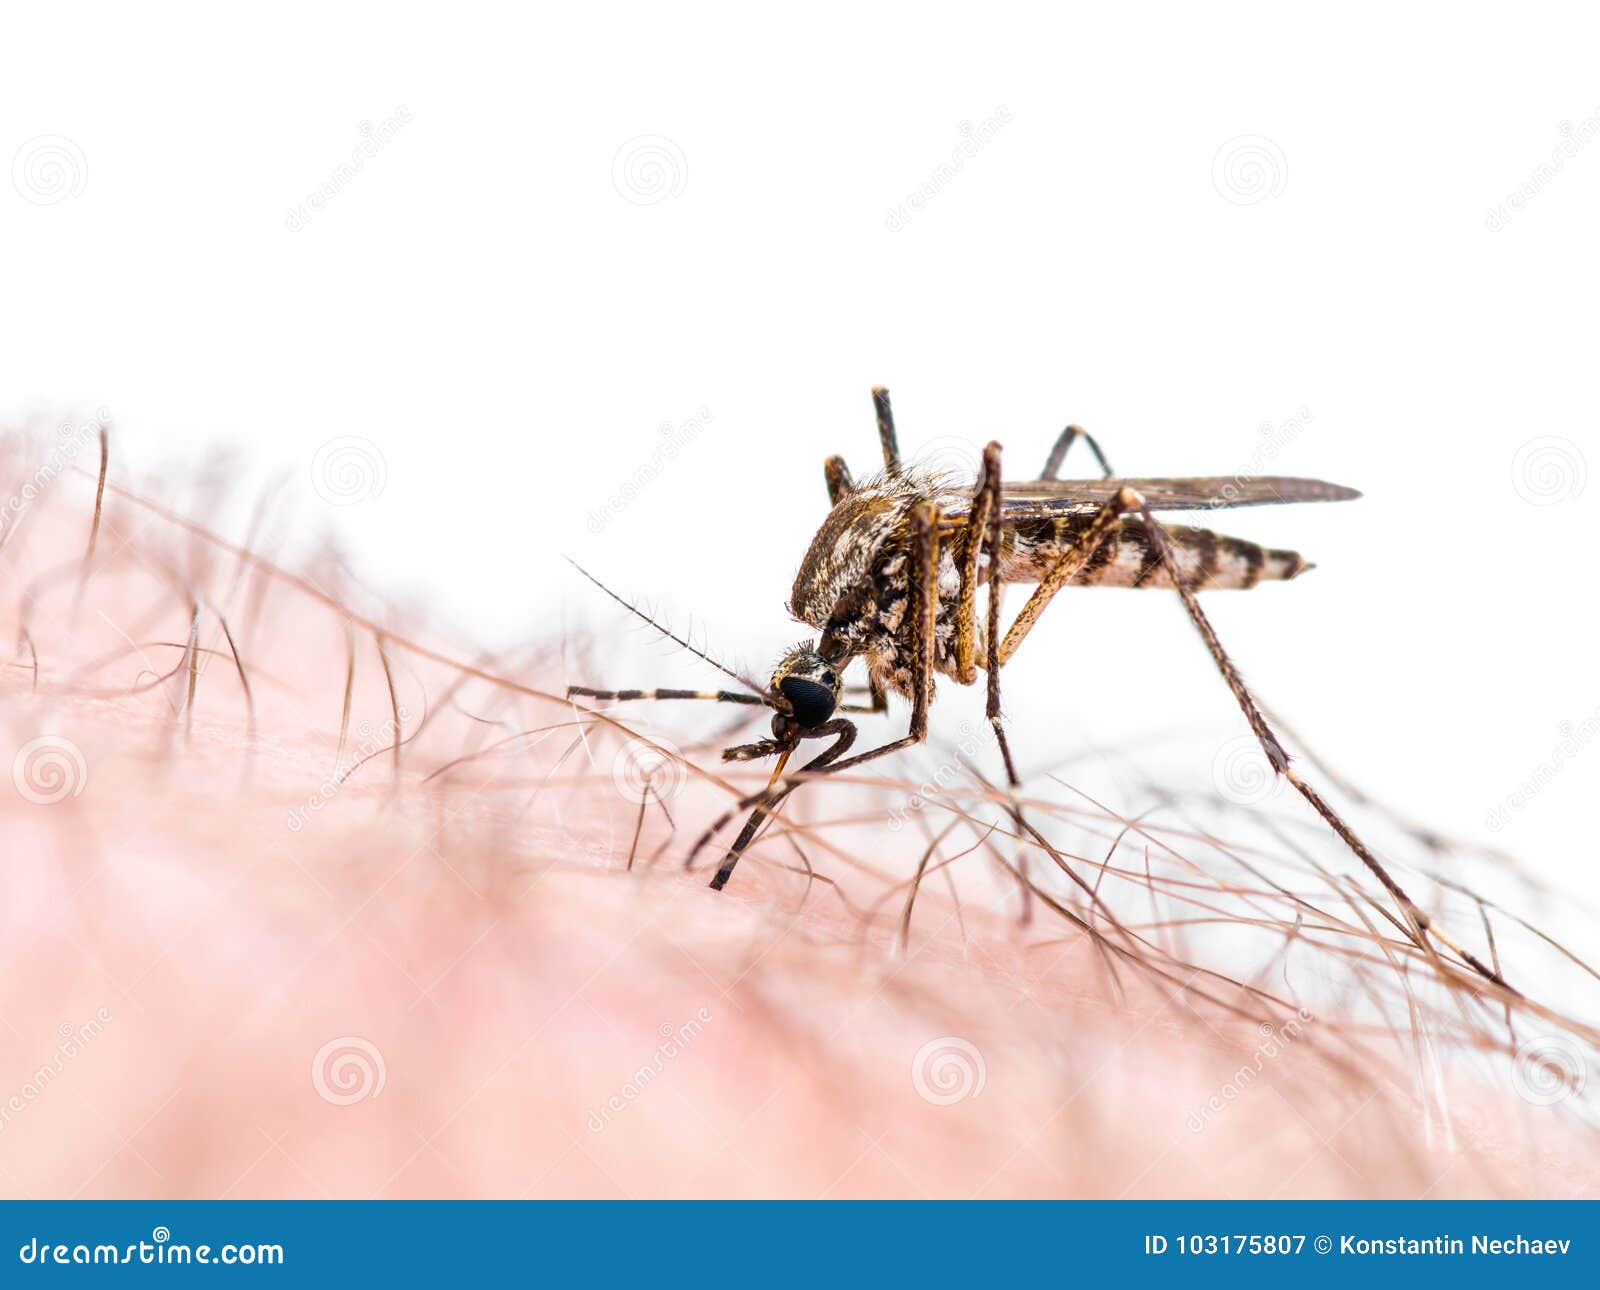 Malaria Or Zika Virus Infected Mosquito Bite Isolated On White Stock